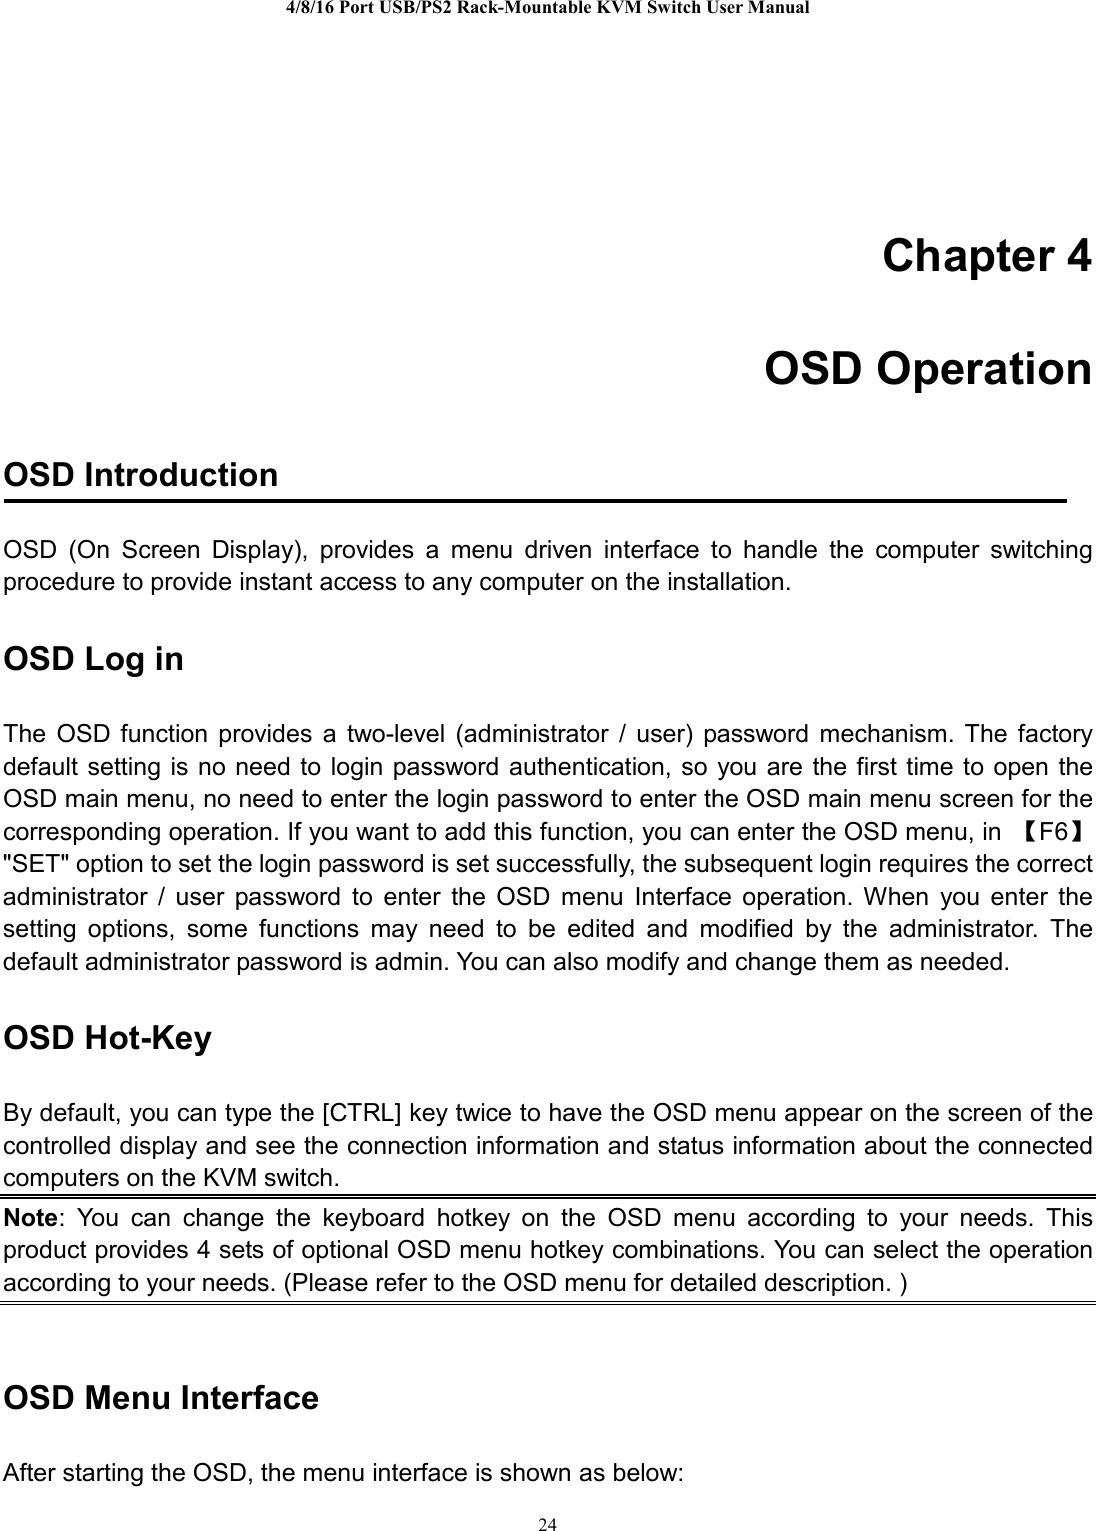 4/8/16 Port USB/PS2 RackMountable KVM Switch User Manual 24  Chapter 4   OSD Operation OSD Introduction &apos;49 *&apos; 4 9+           OSD Log in  &apos;49    ; * $ +      &apos;49&apos;49!&apos;49 【B】P42P $      &apos;49  !  5                 6OSD HotKey F&quot;8G.&apos;493C/Note) 6    . .   &apos;49      &gt;&apos;49.6*&amp;&apos;49+OSD Menu Interface %&apos;49)